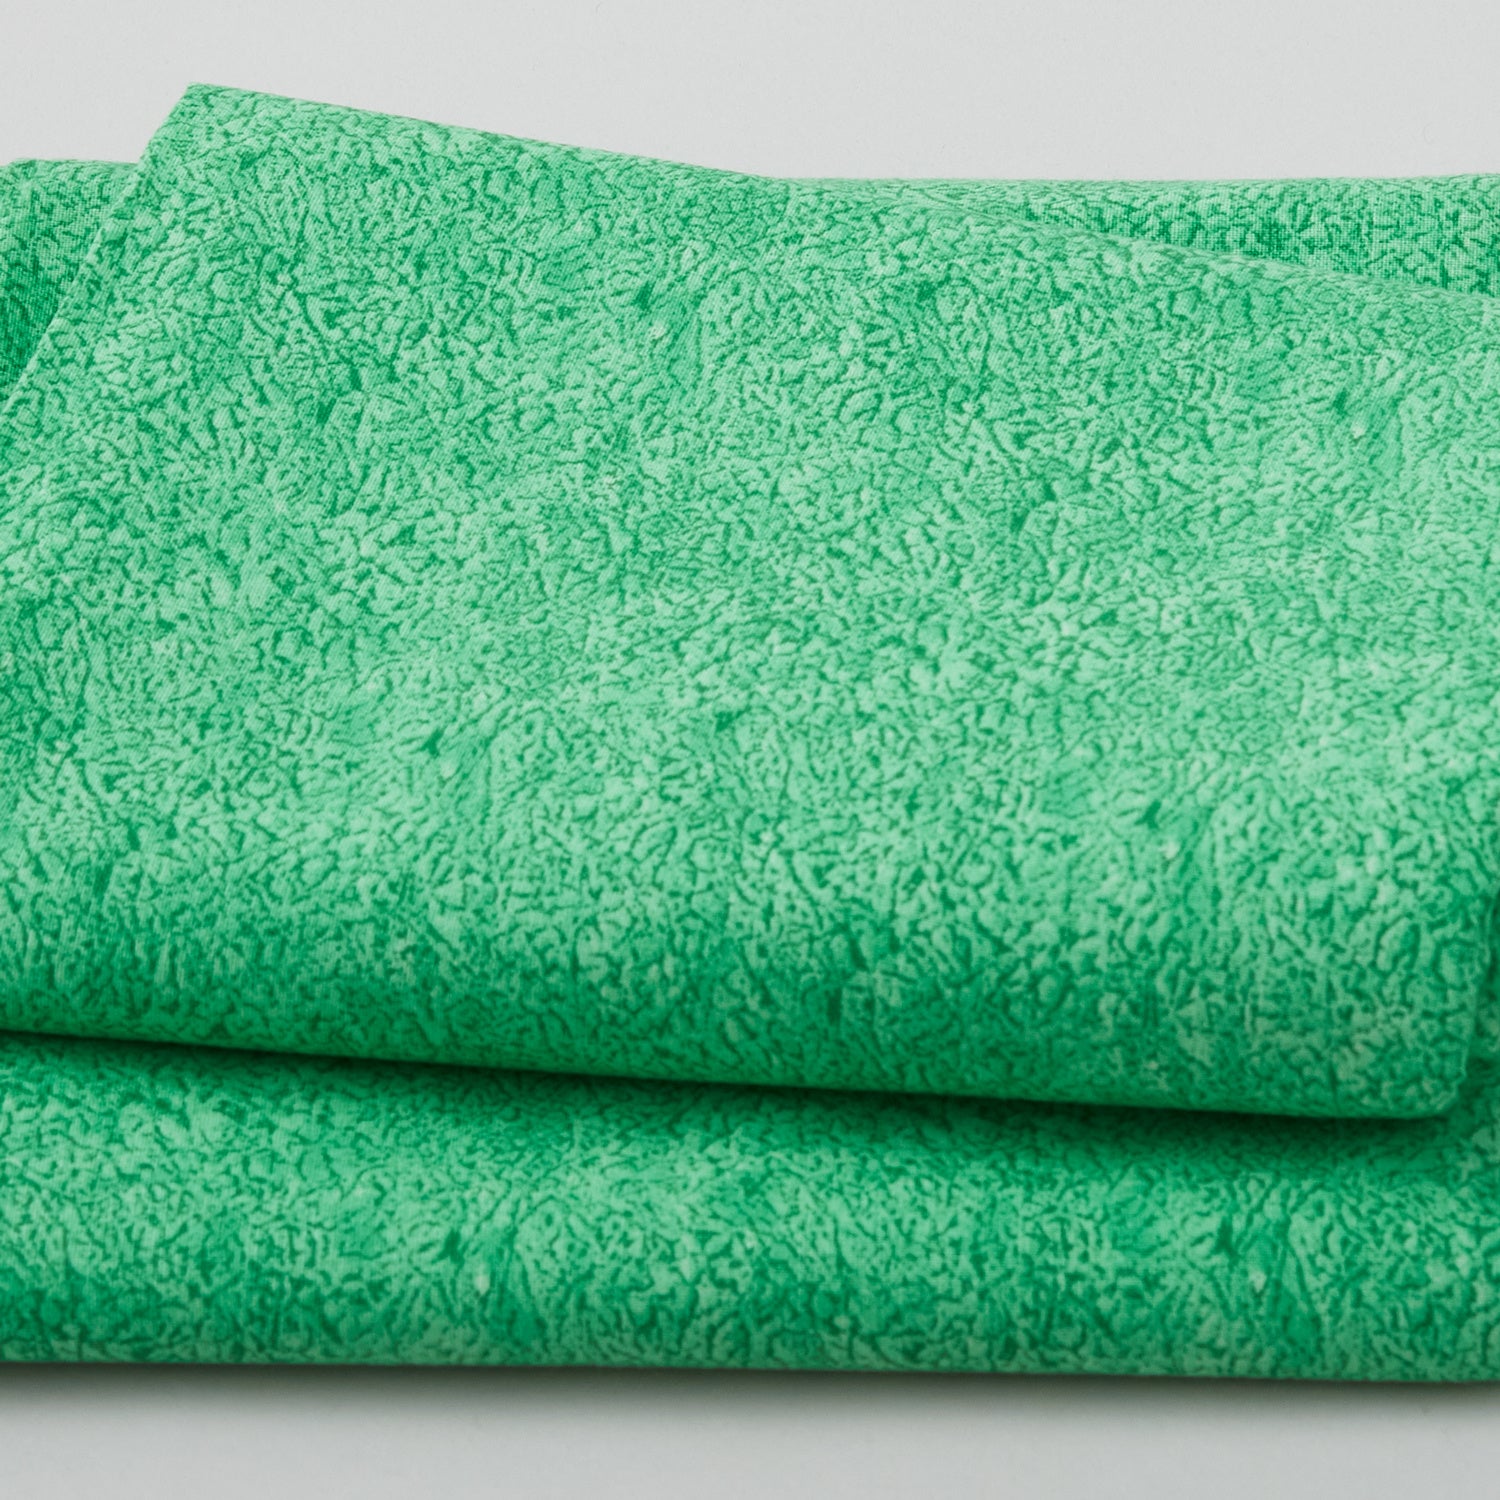 1PK Aurifil Mako Cotton Quilting Thread - 50 wt. - #5085 Light Khaki Green  1420 yd.